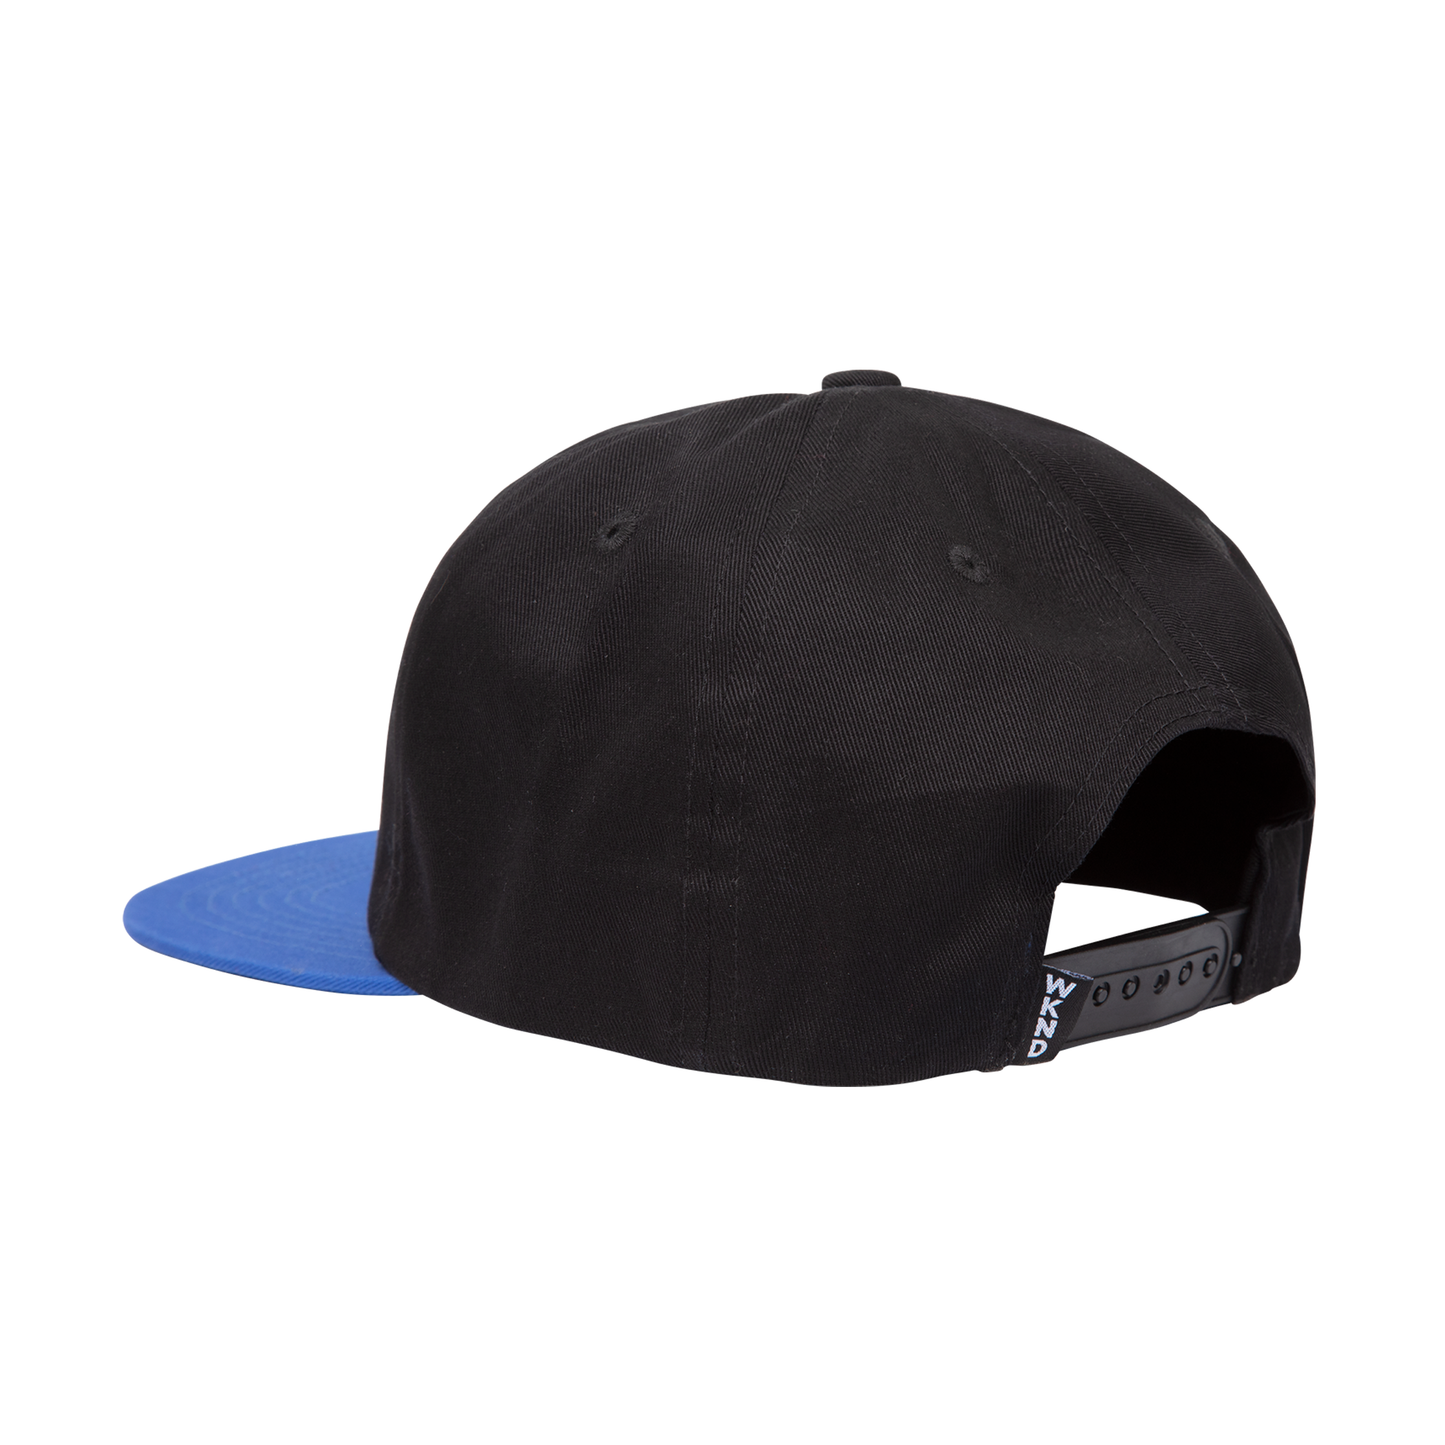 Life Hat, Black/Blue